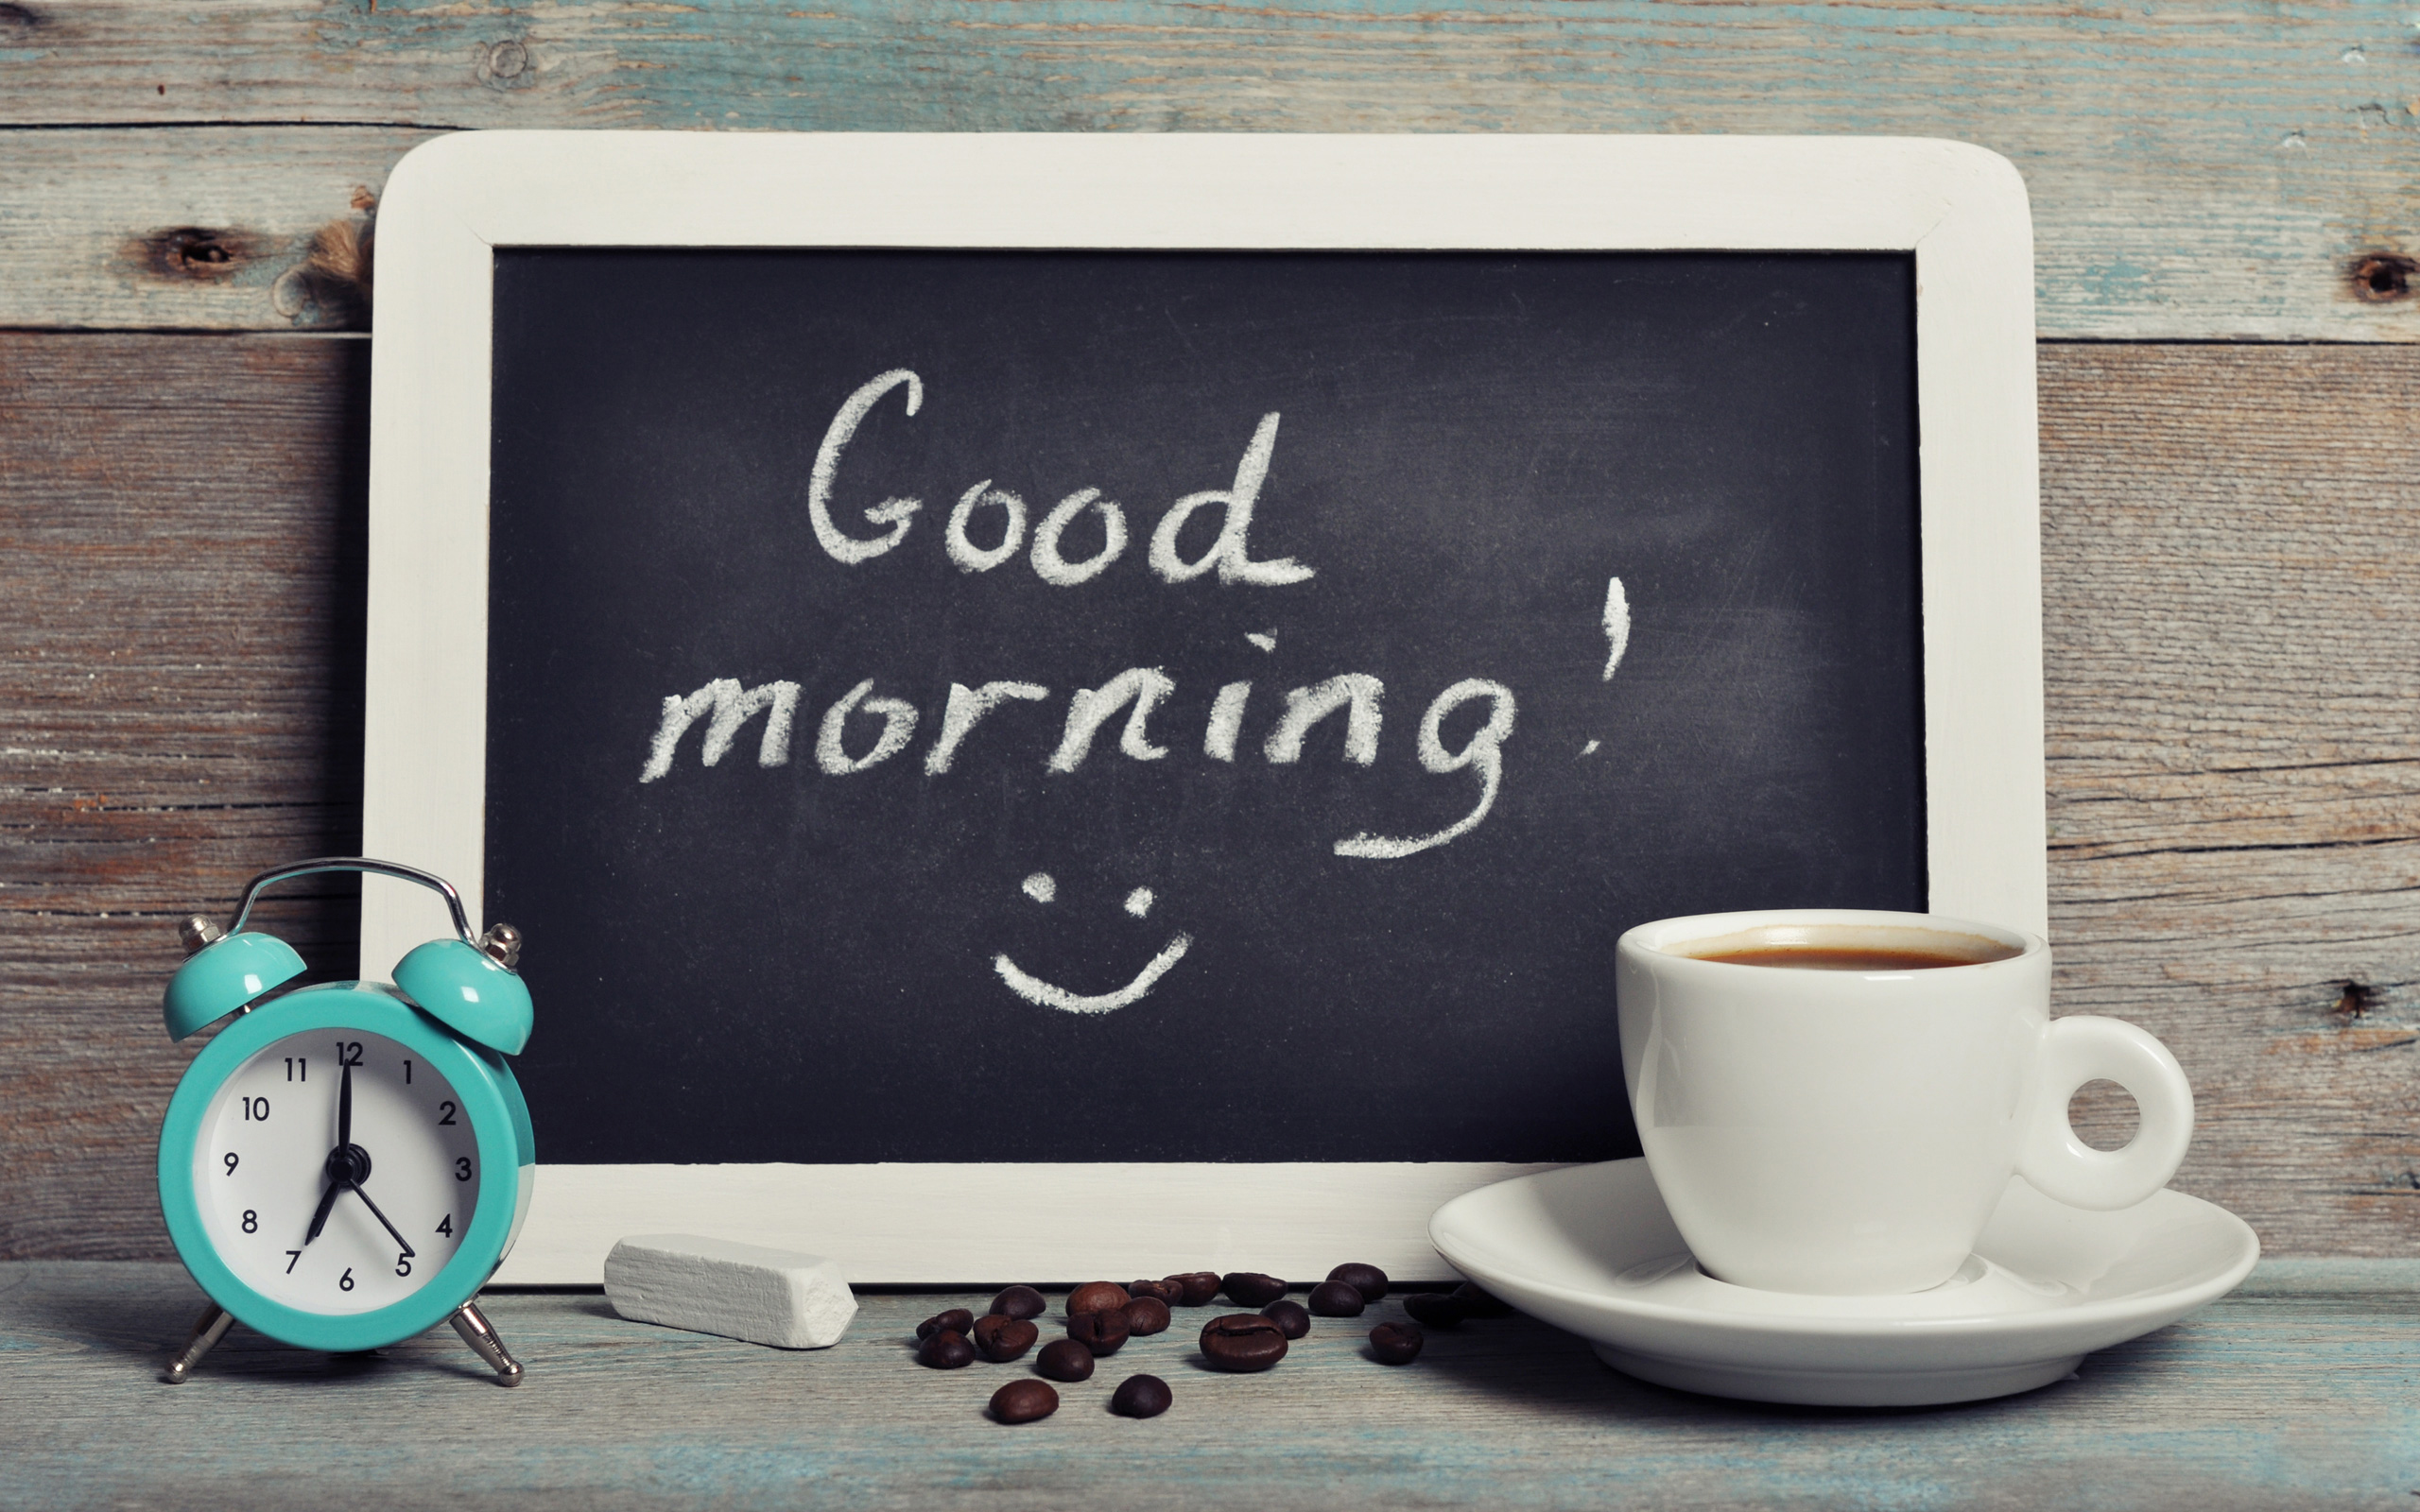 Good Morning Wish Clock Mug Coffee Image 1080p Good Morning Hd